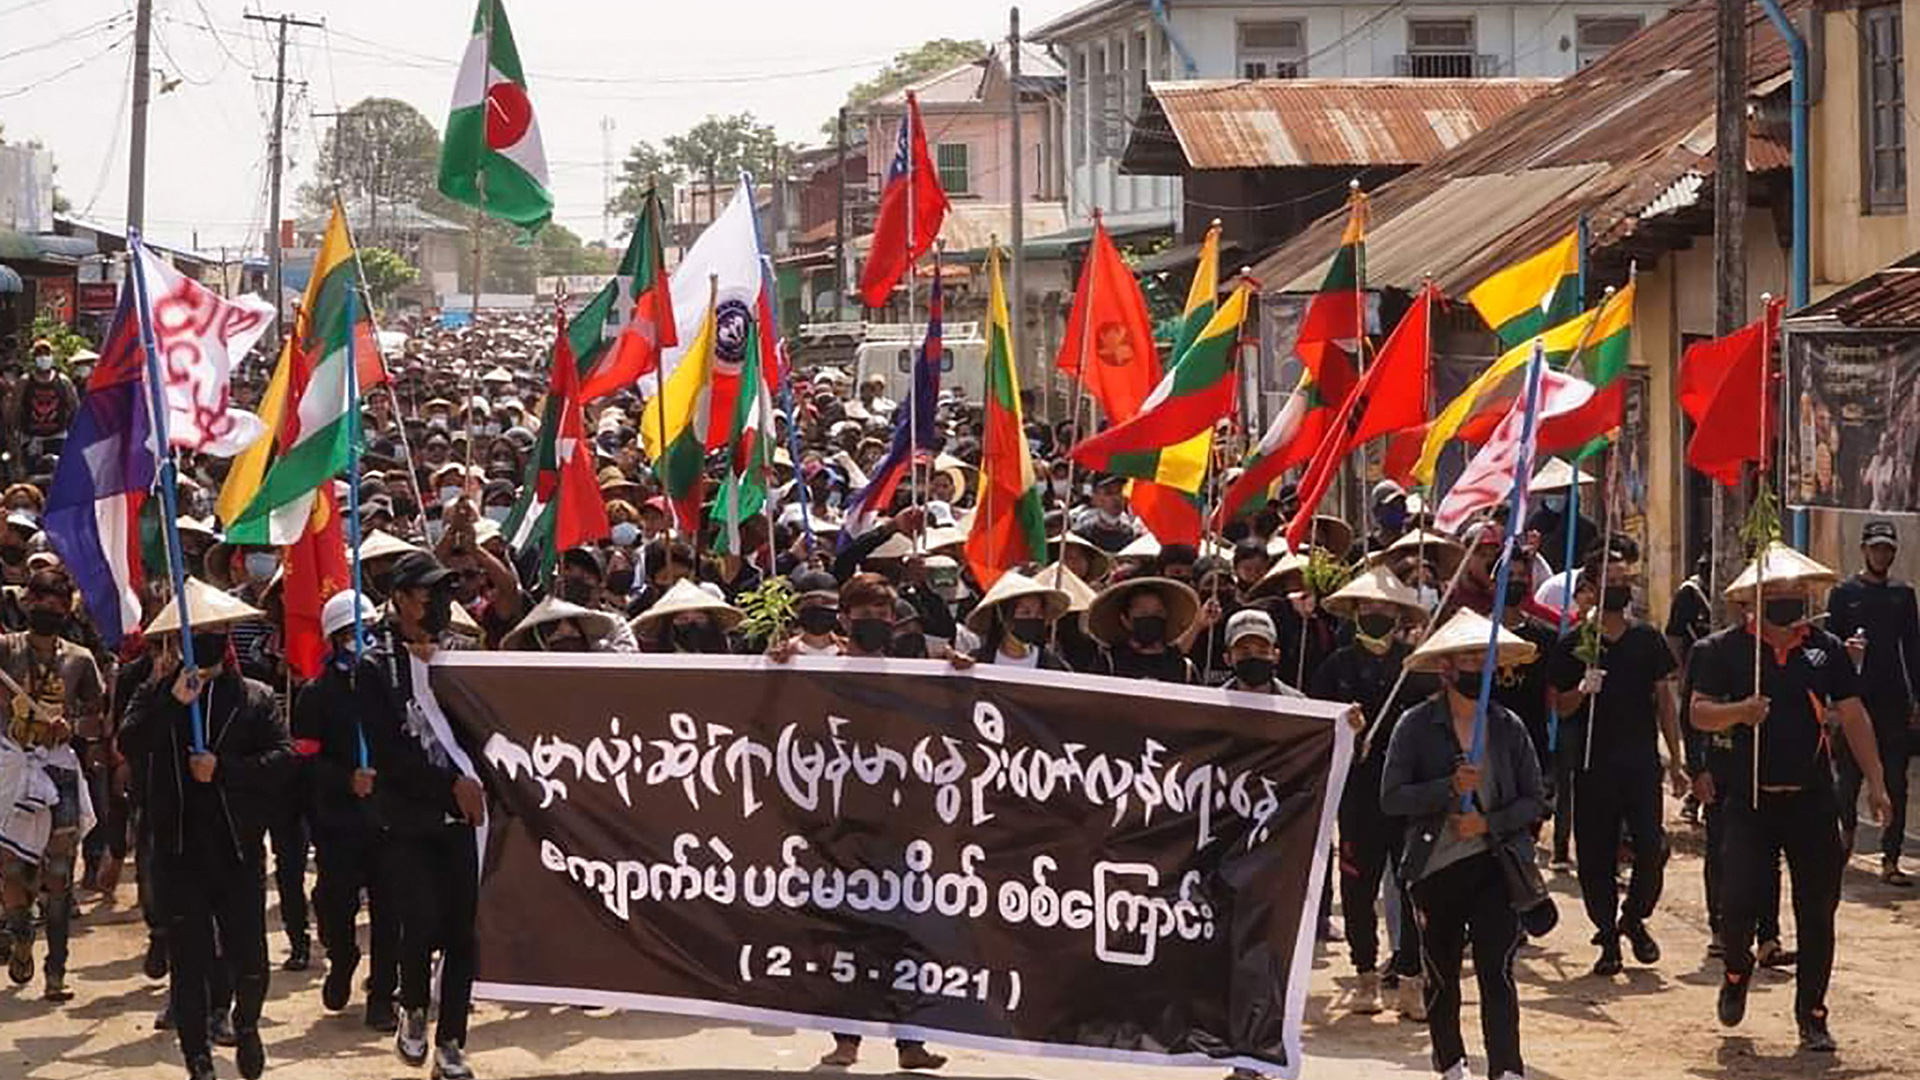 Demonstranten mit Transparent und Fahnen am "Globalen Tag der Frühlingsrevolution in Myanmar" in Kyaukme in Myanmars Shan-Staat. | AFP